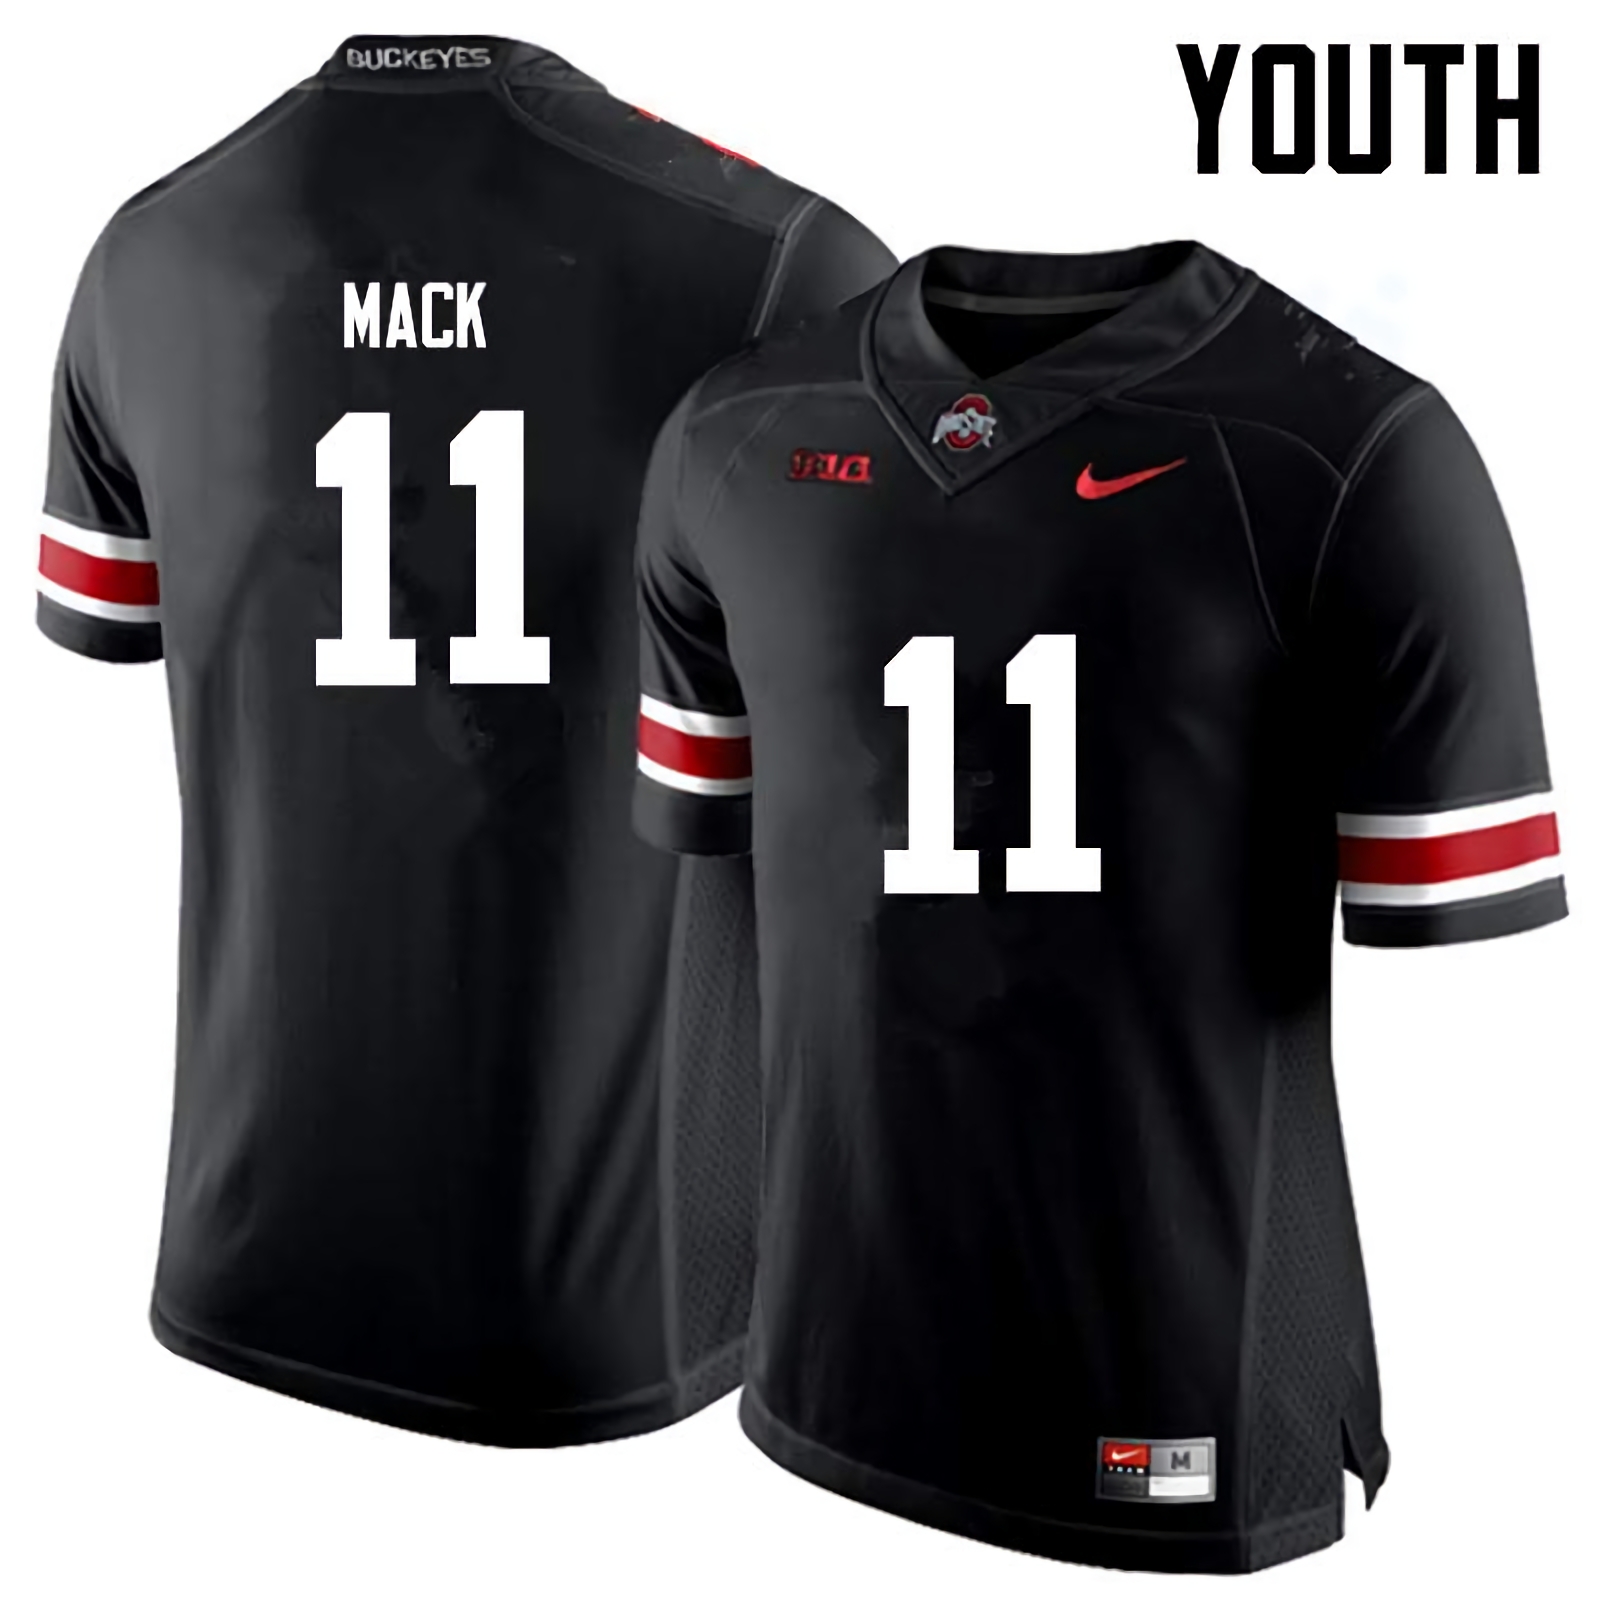 Austin Mack Ohio State Buckeyes Youth NCAA #11 Nike Black College Stitched Football Jersey ABM8756VP